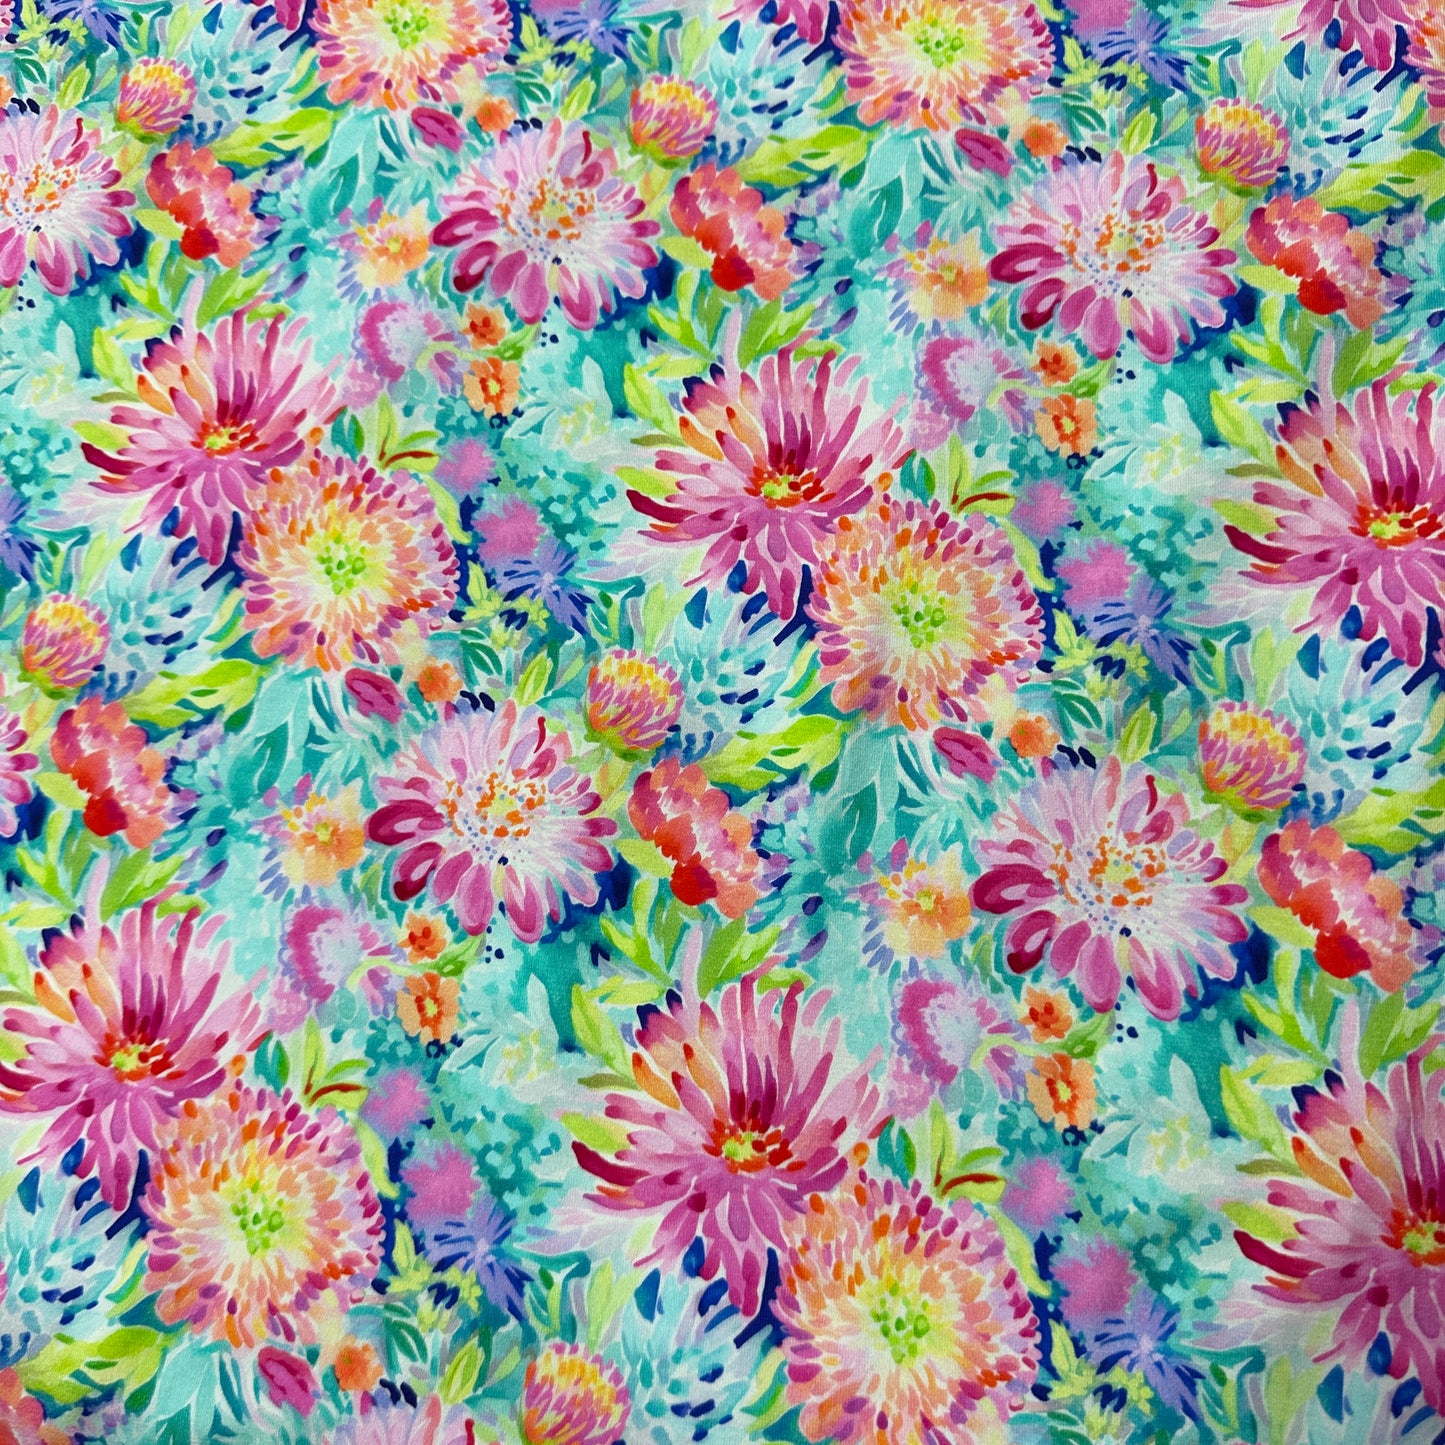 Painted Dahlias on Organic Cotton/Spandex Jersey Fabric